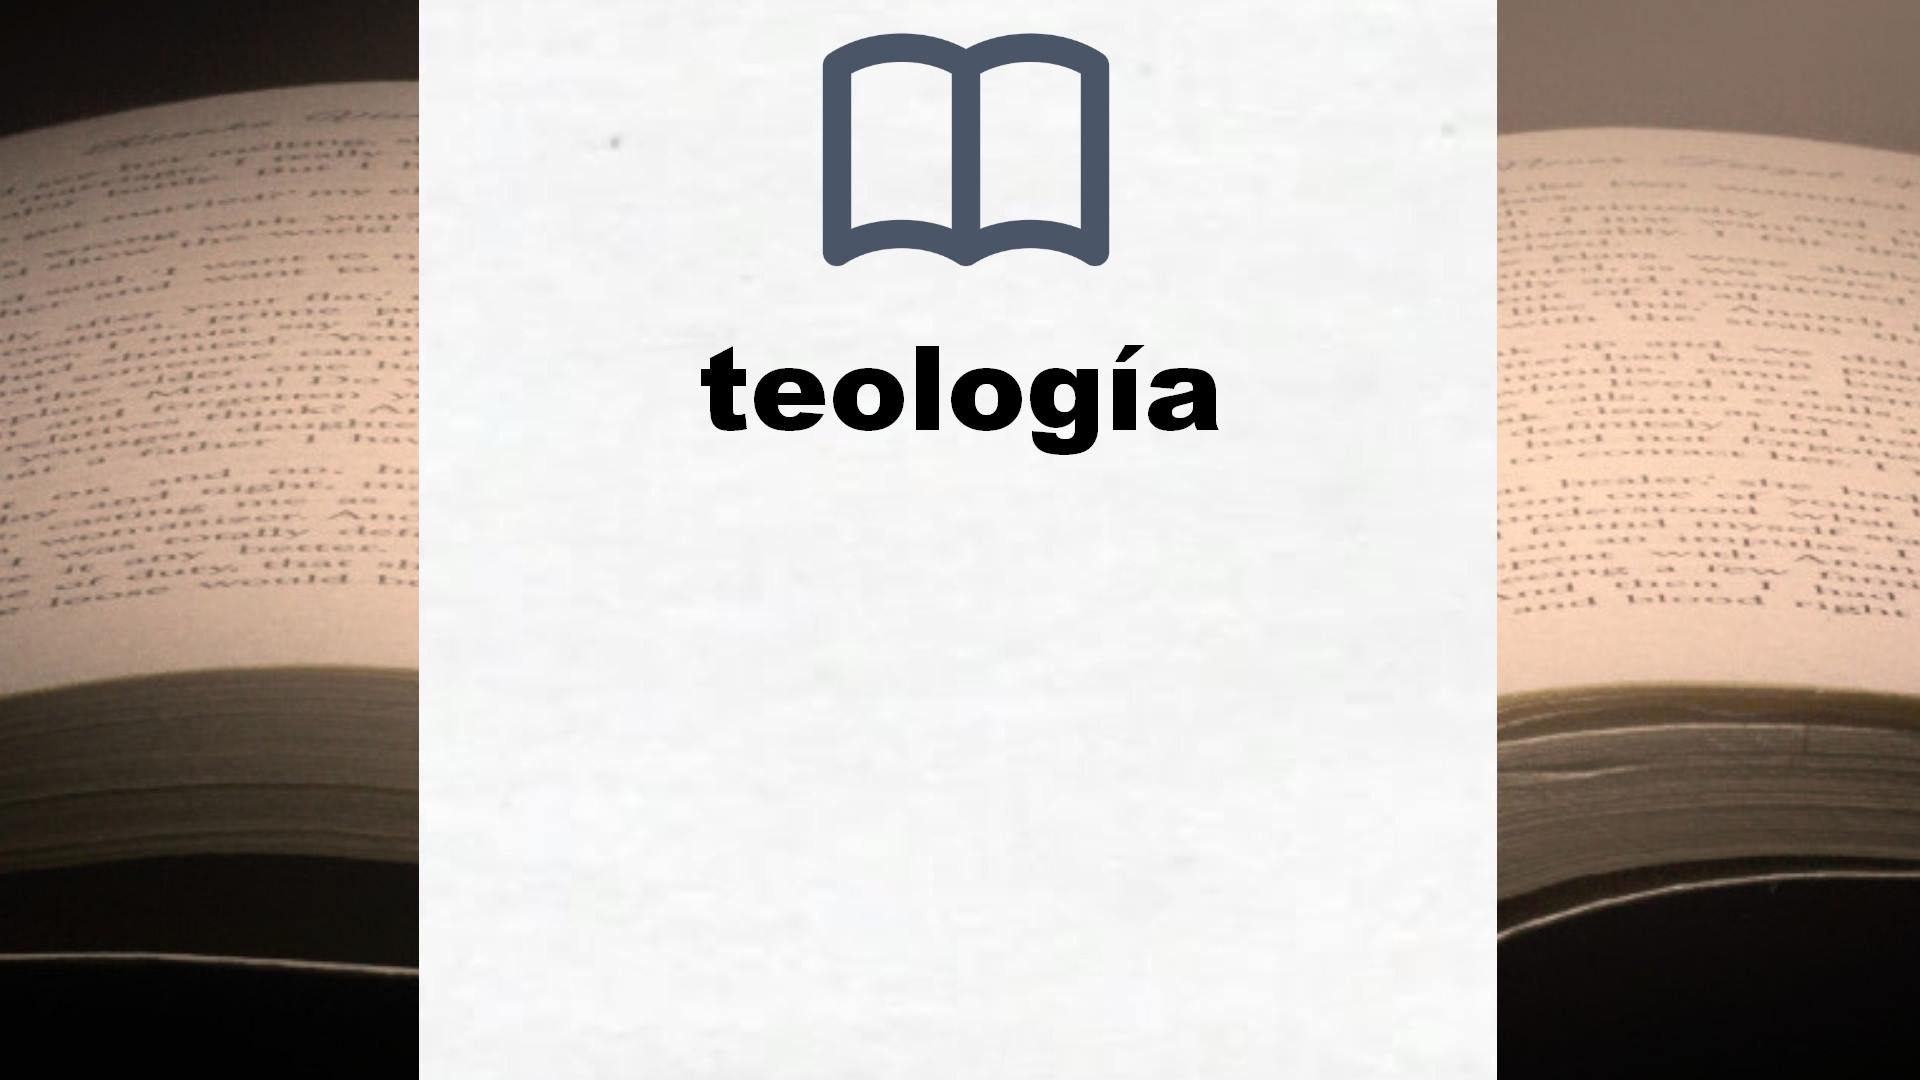 Libros sobre teología